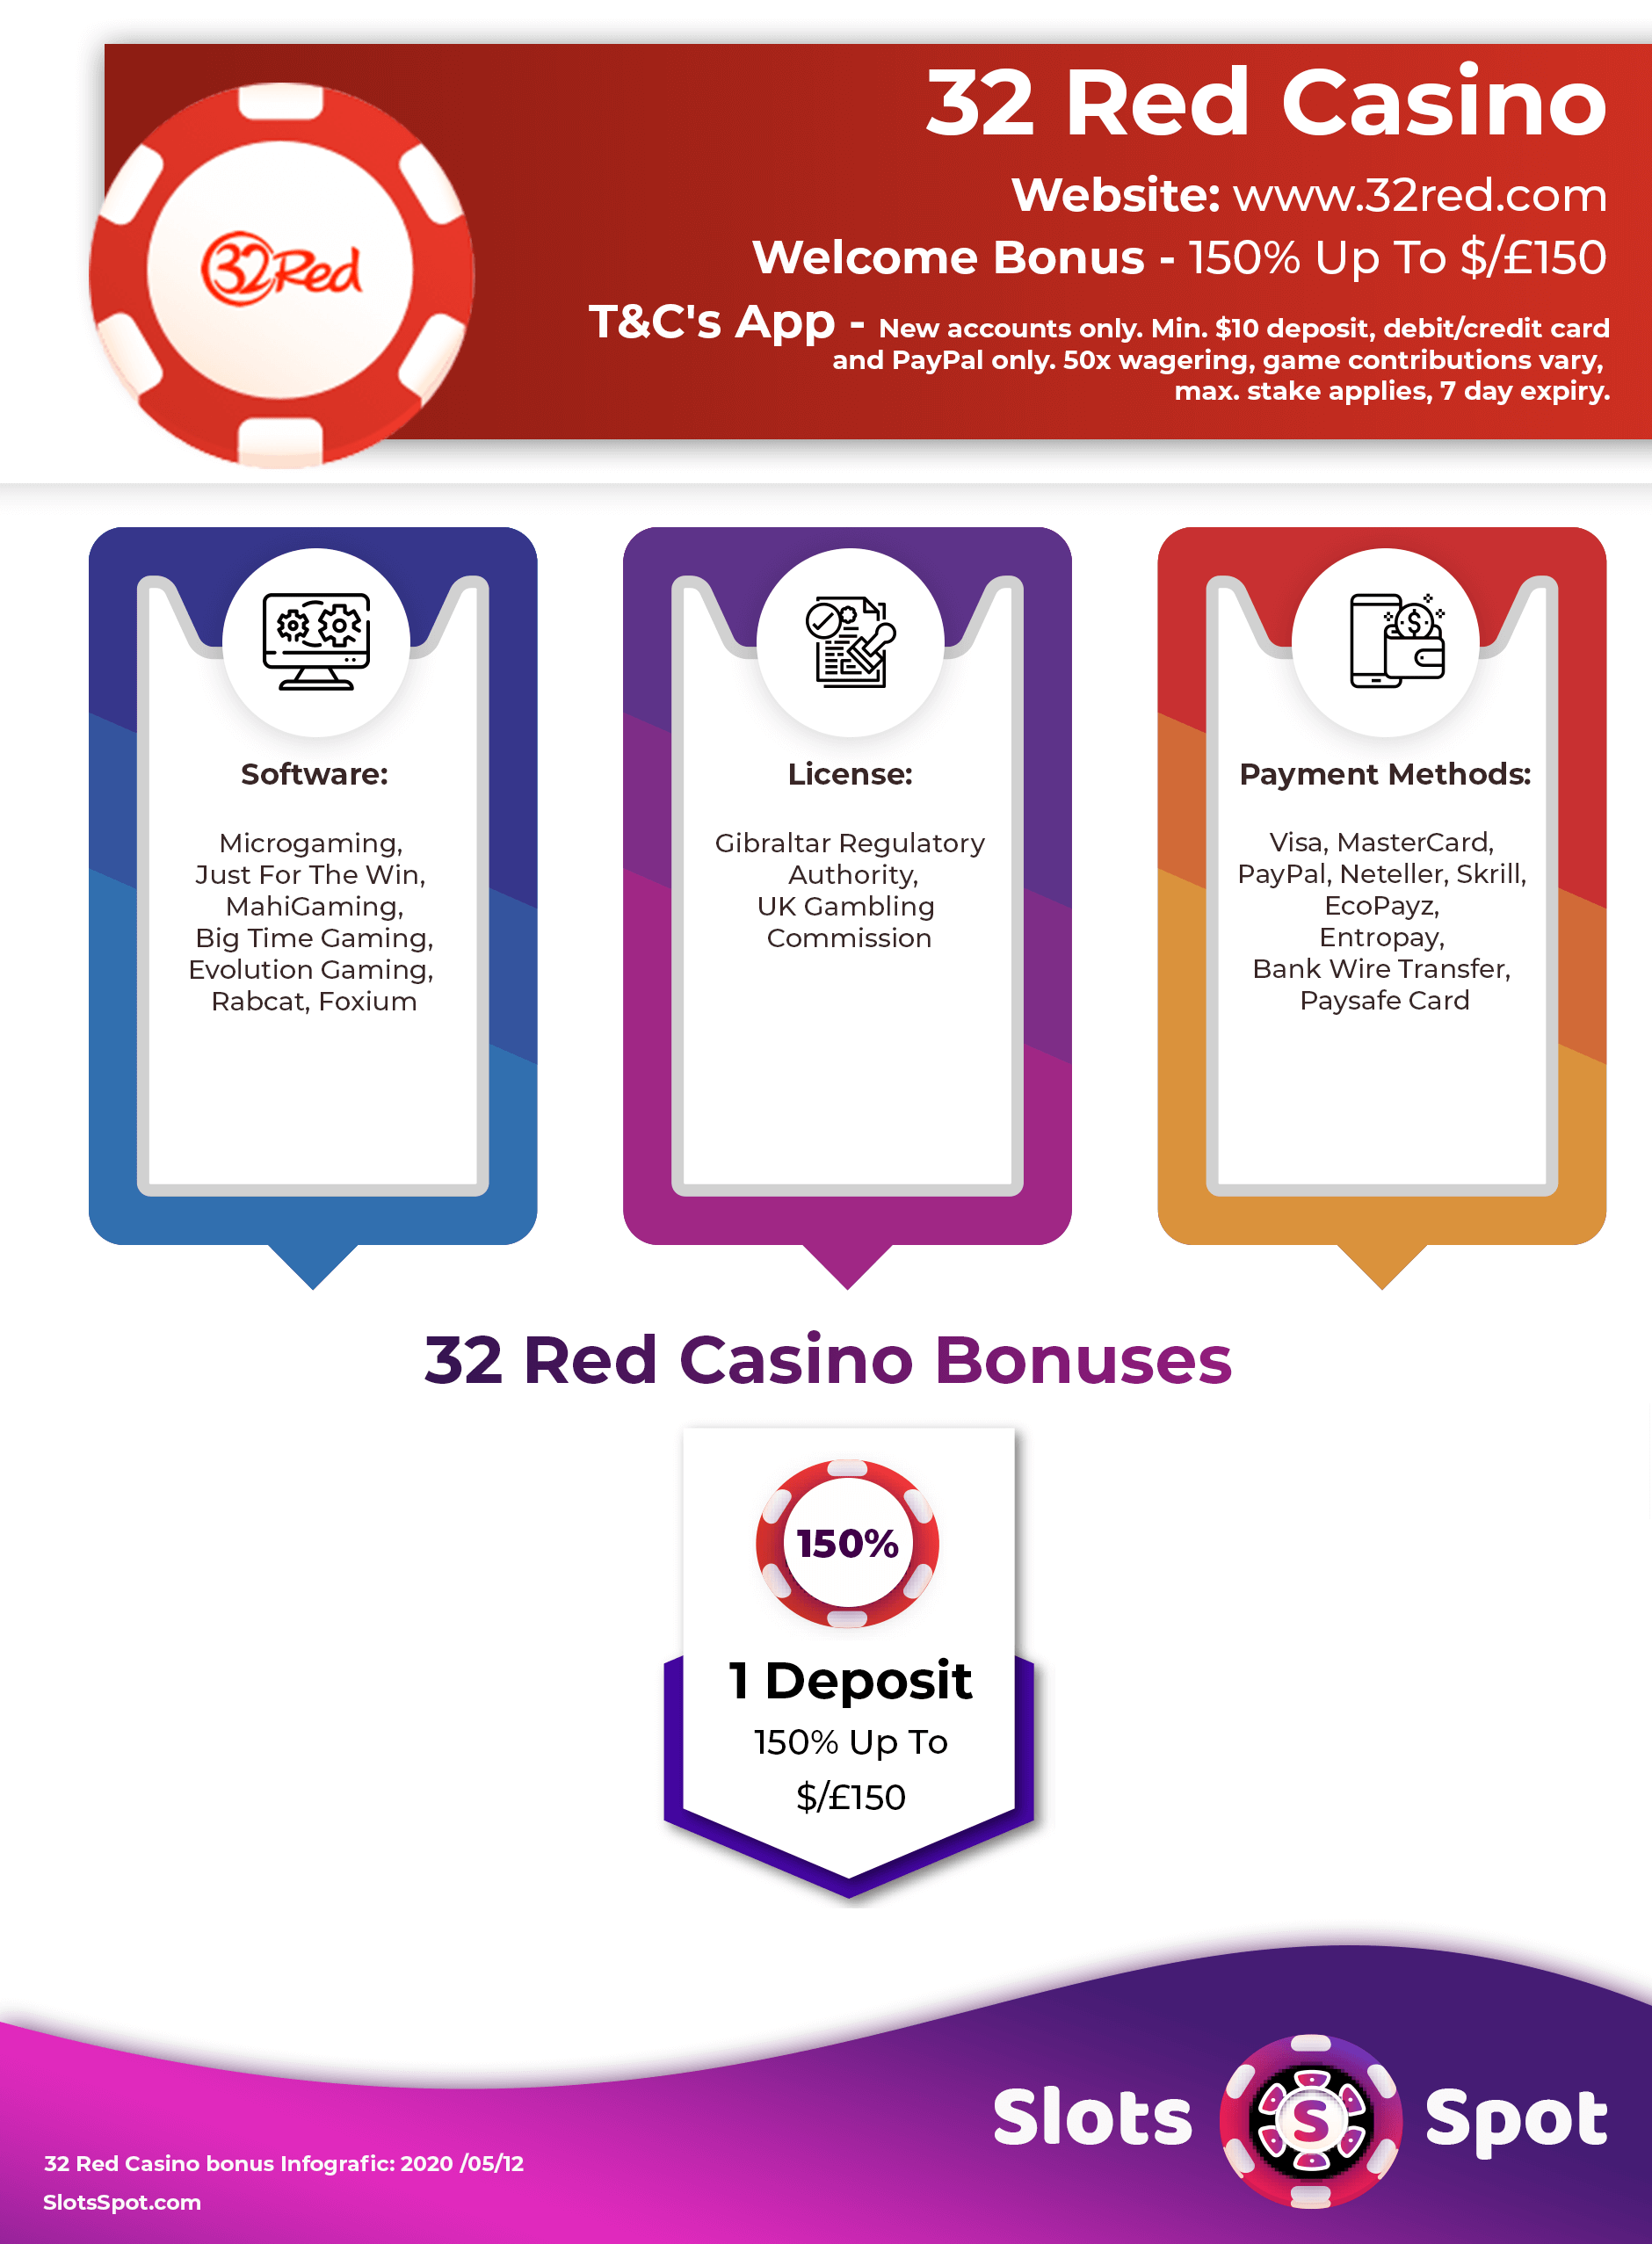 Virgin casino sign up bonus